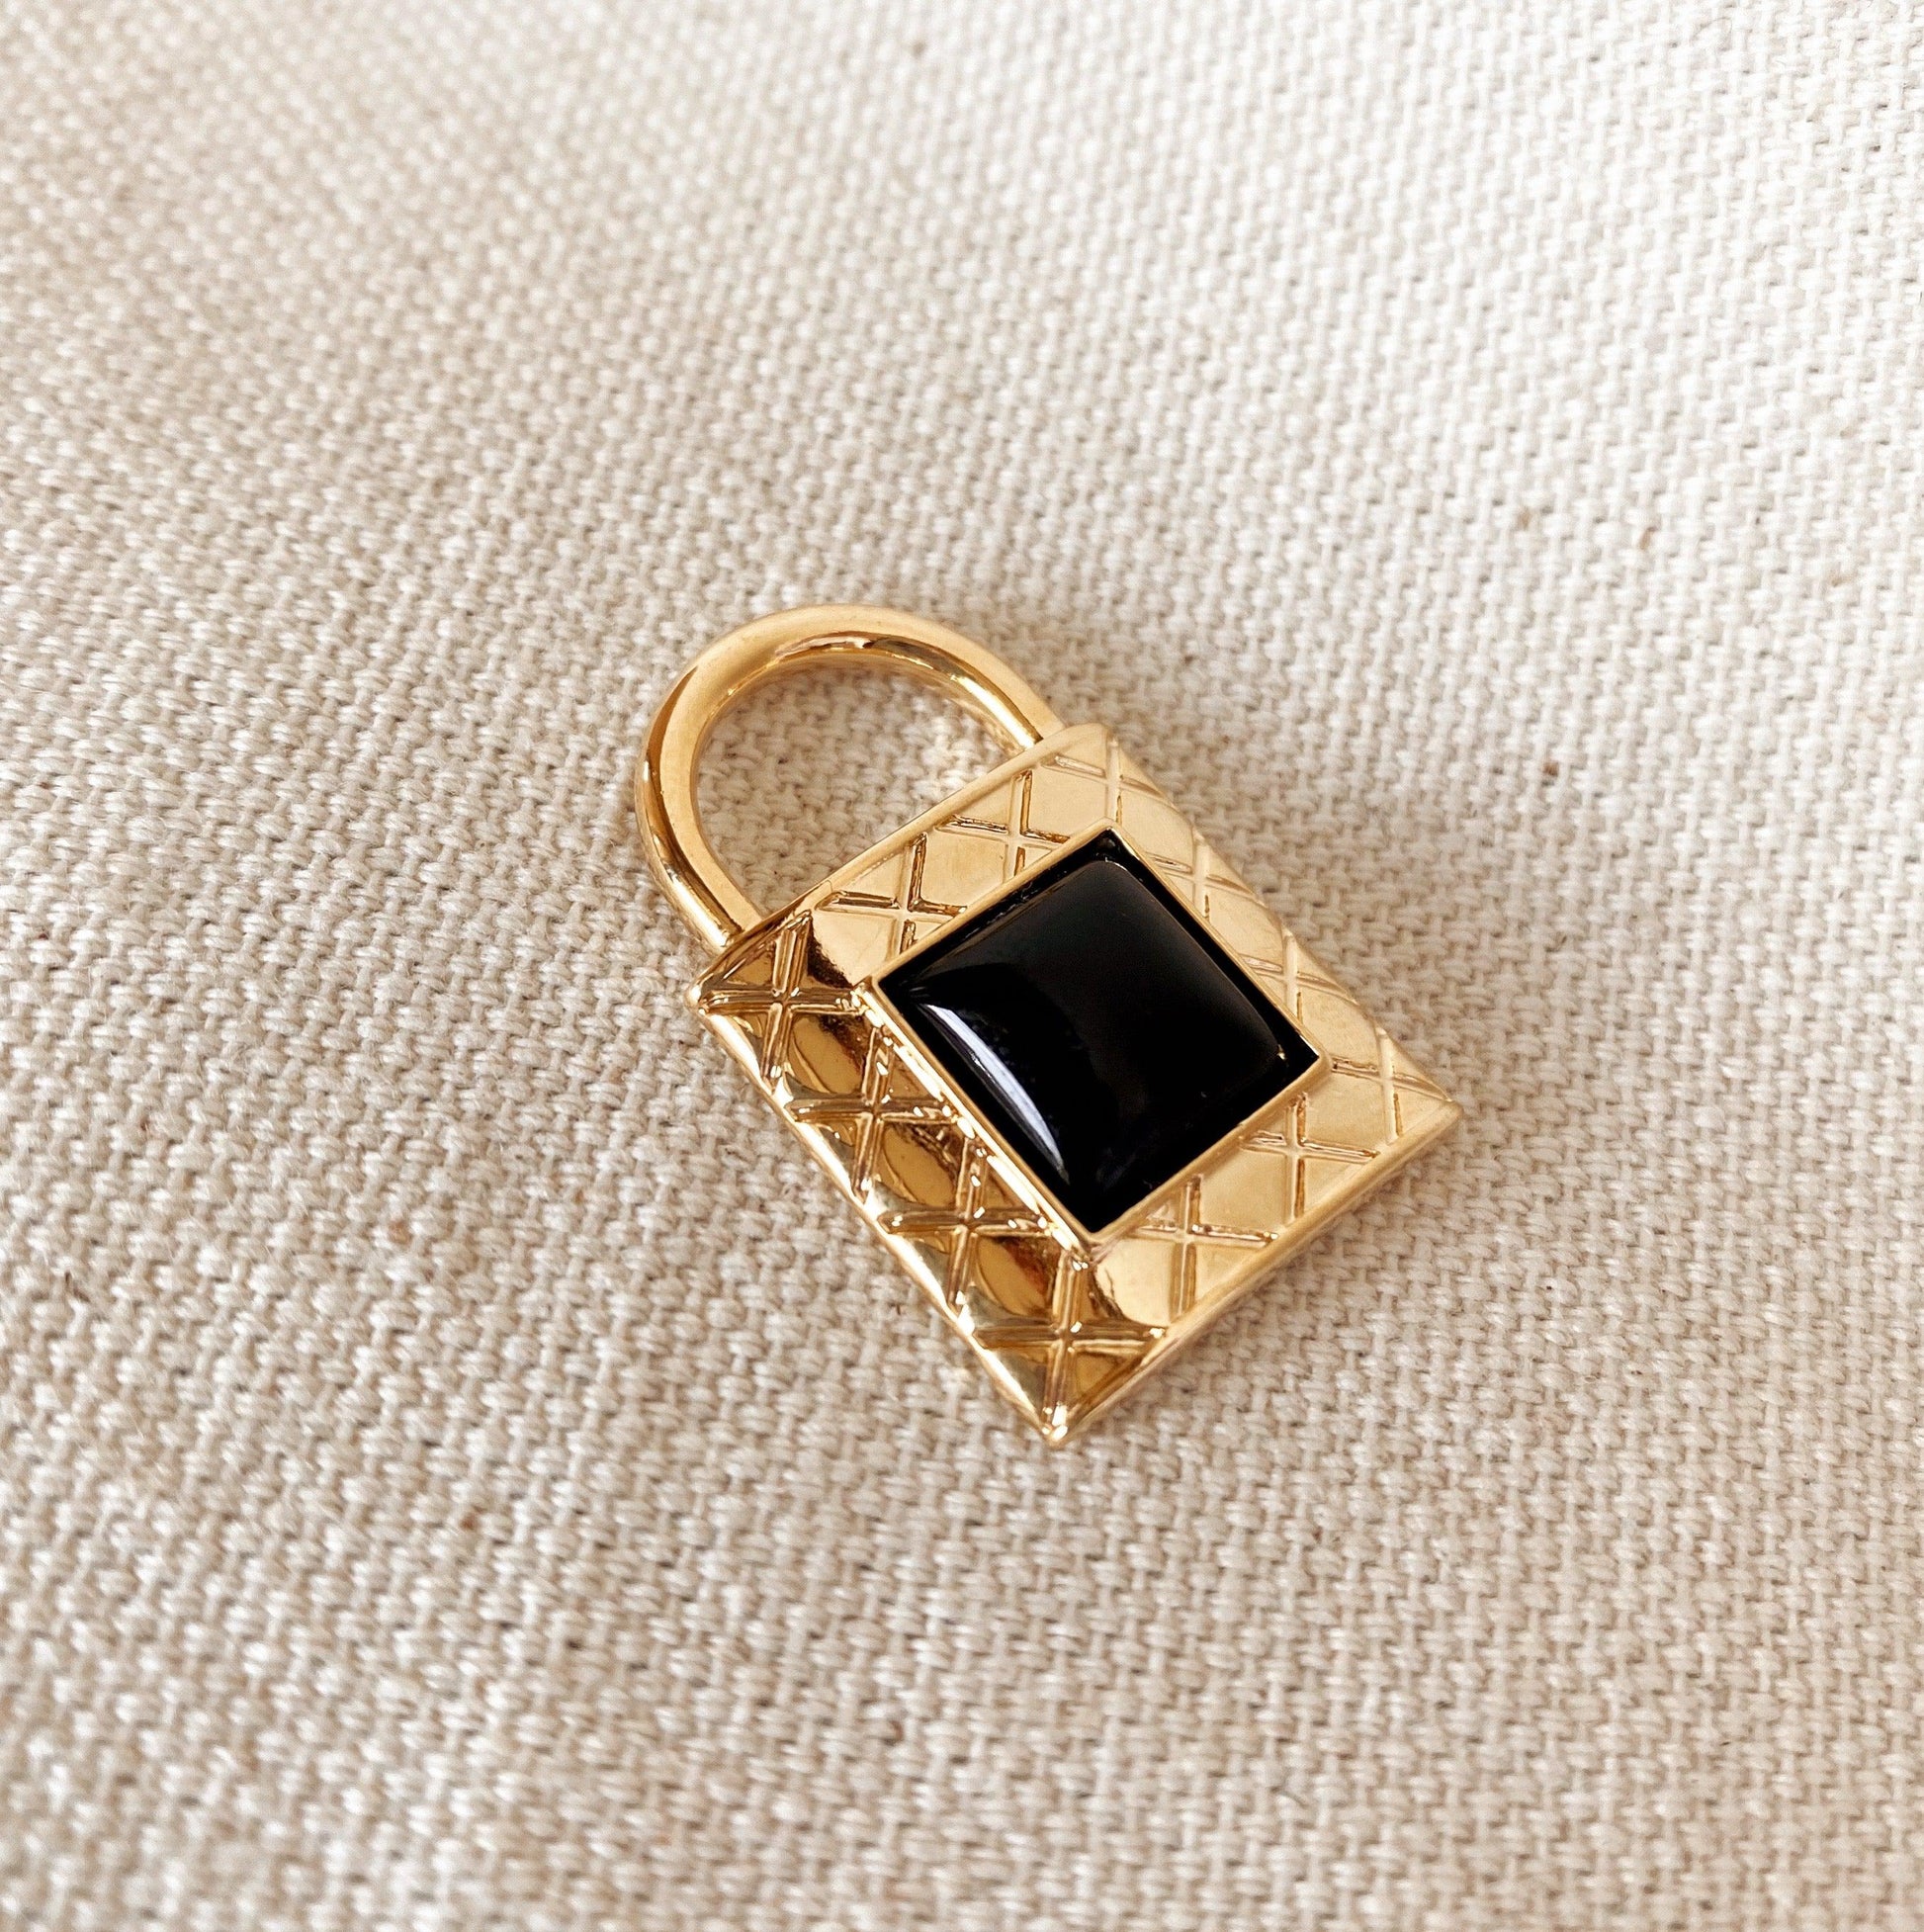 GoldFi 18k Gold Filled Diamond Cut Pattern Lock Pendant